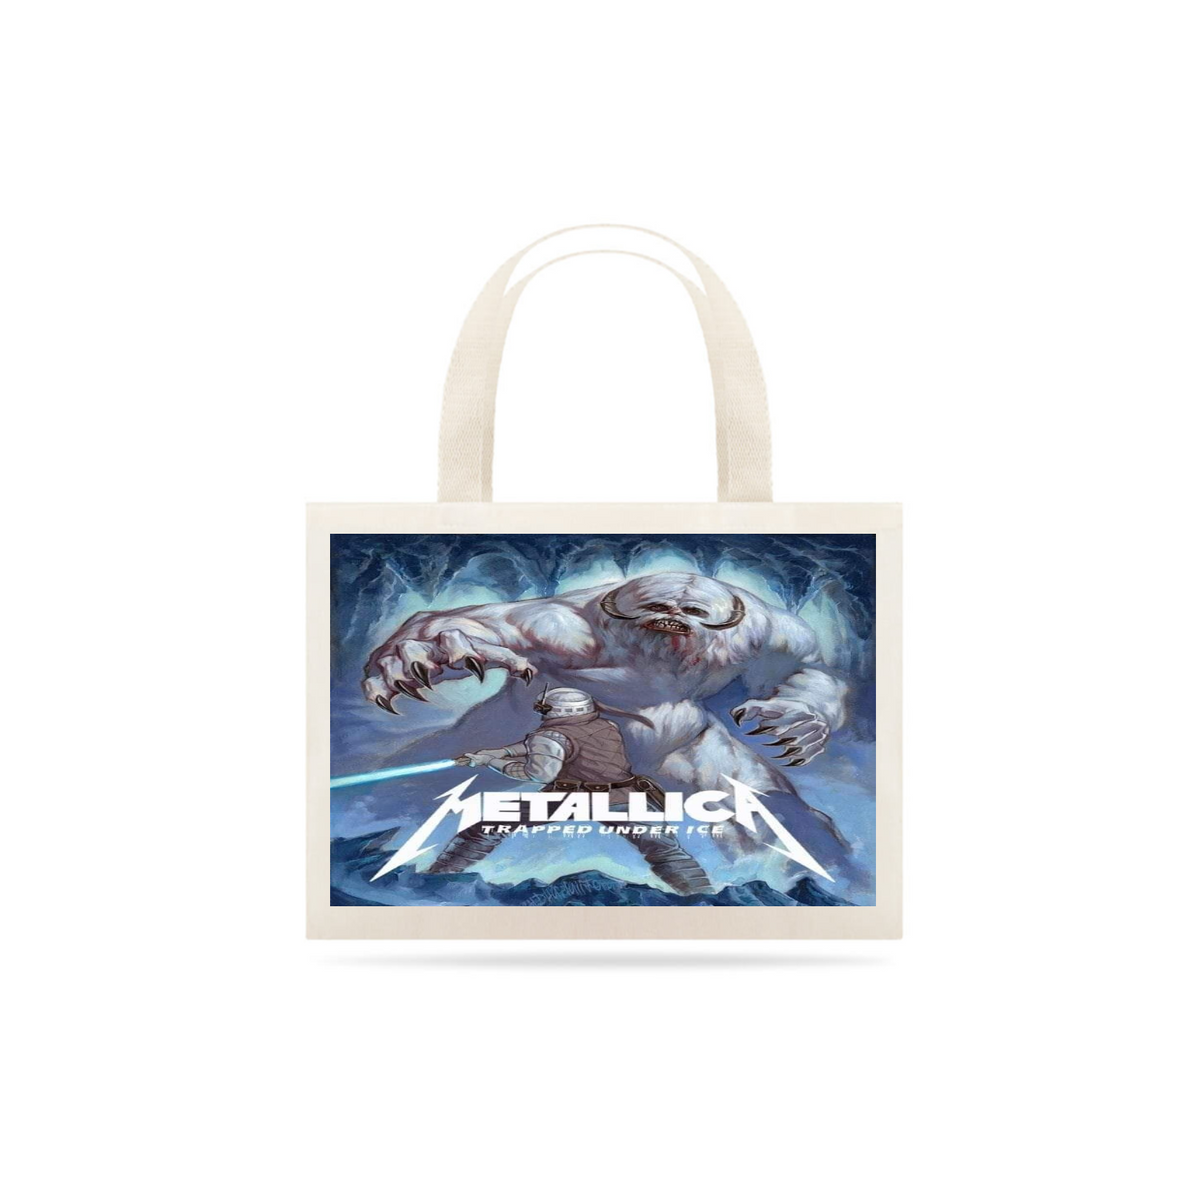 Nome do produto: Metallica - Trapped Under Ice